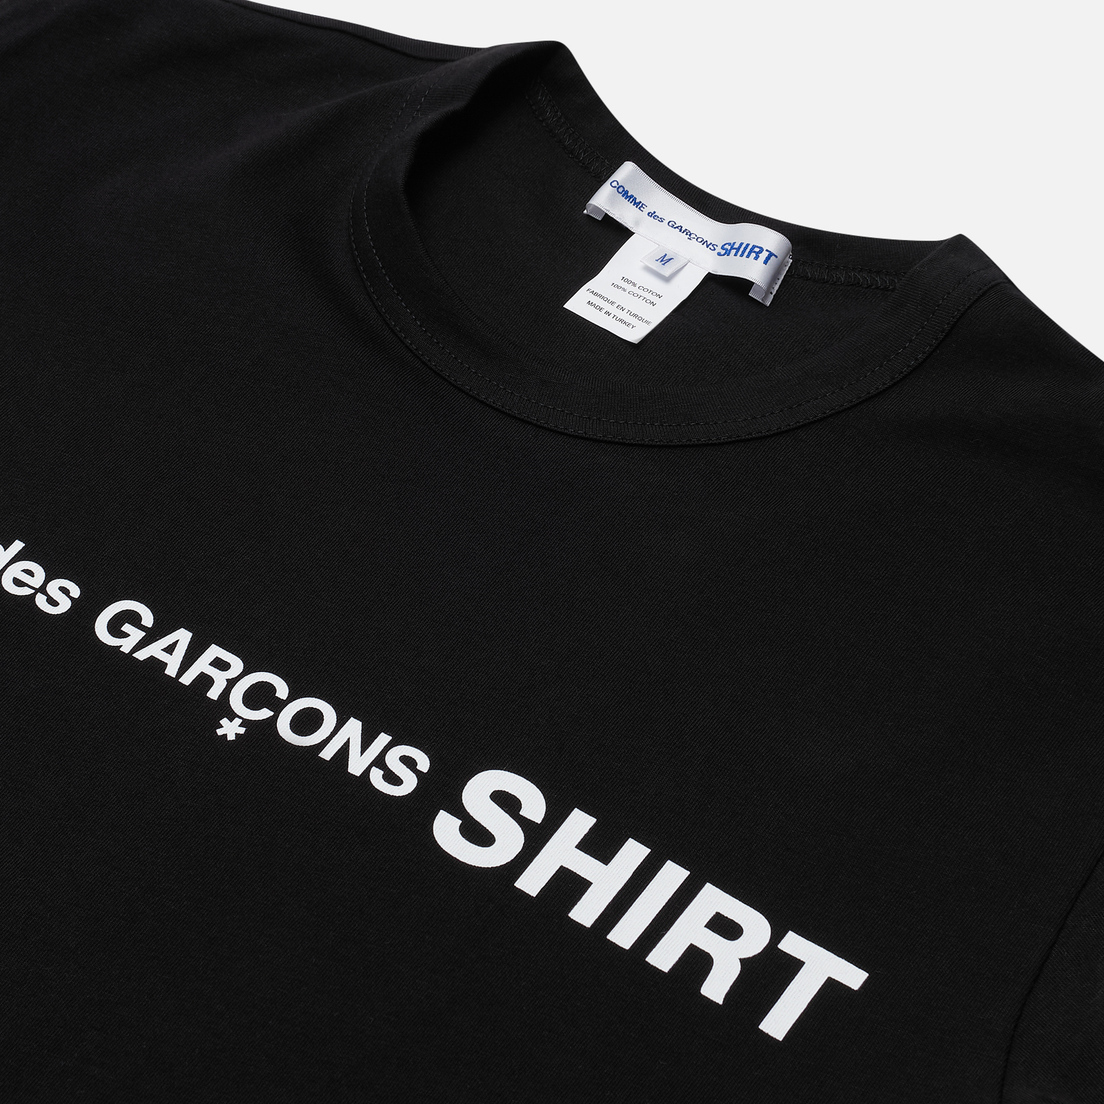 Comme des Garcons SHIRT Мужская футболка Logo Print Front